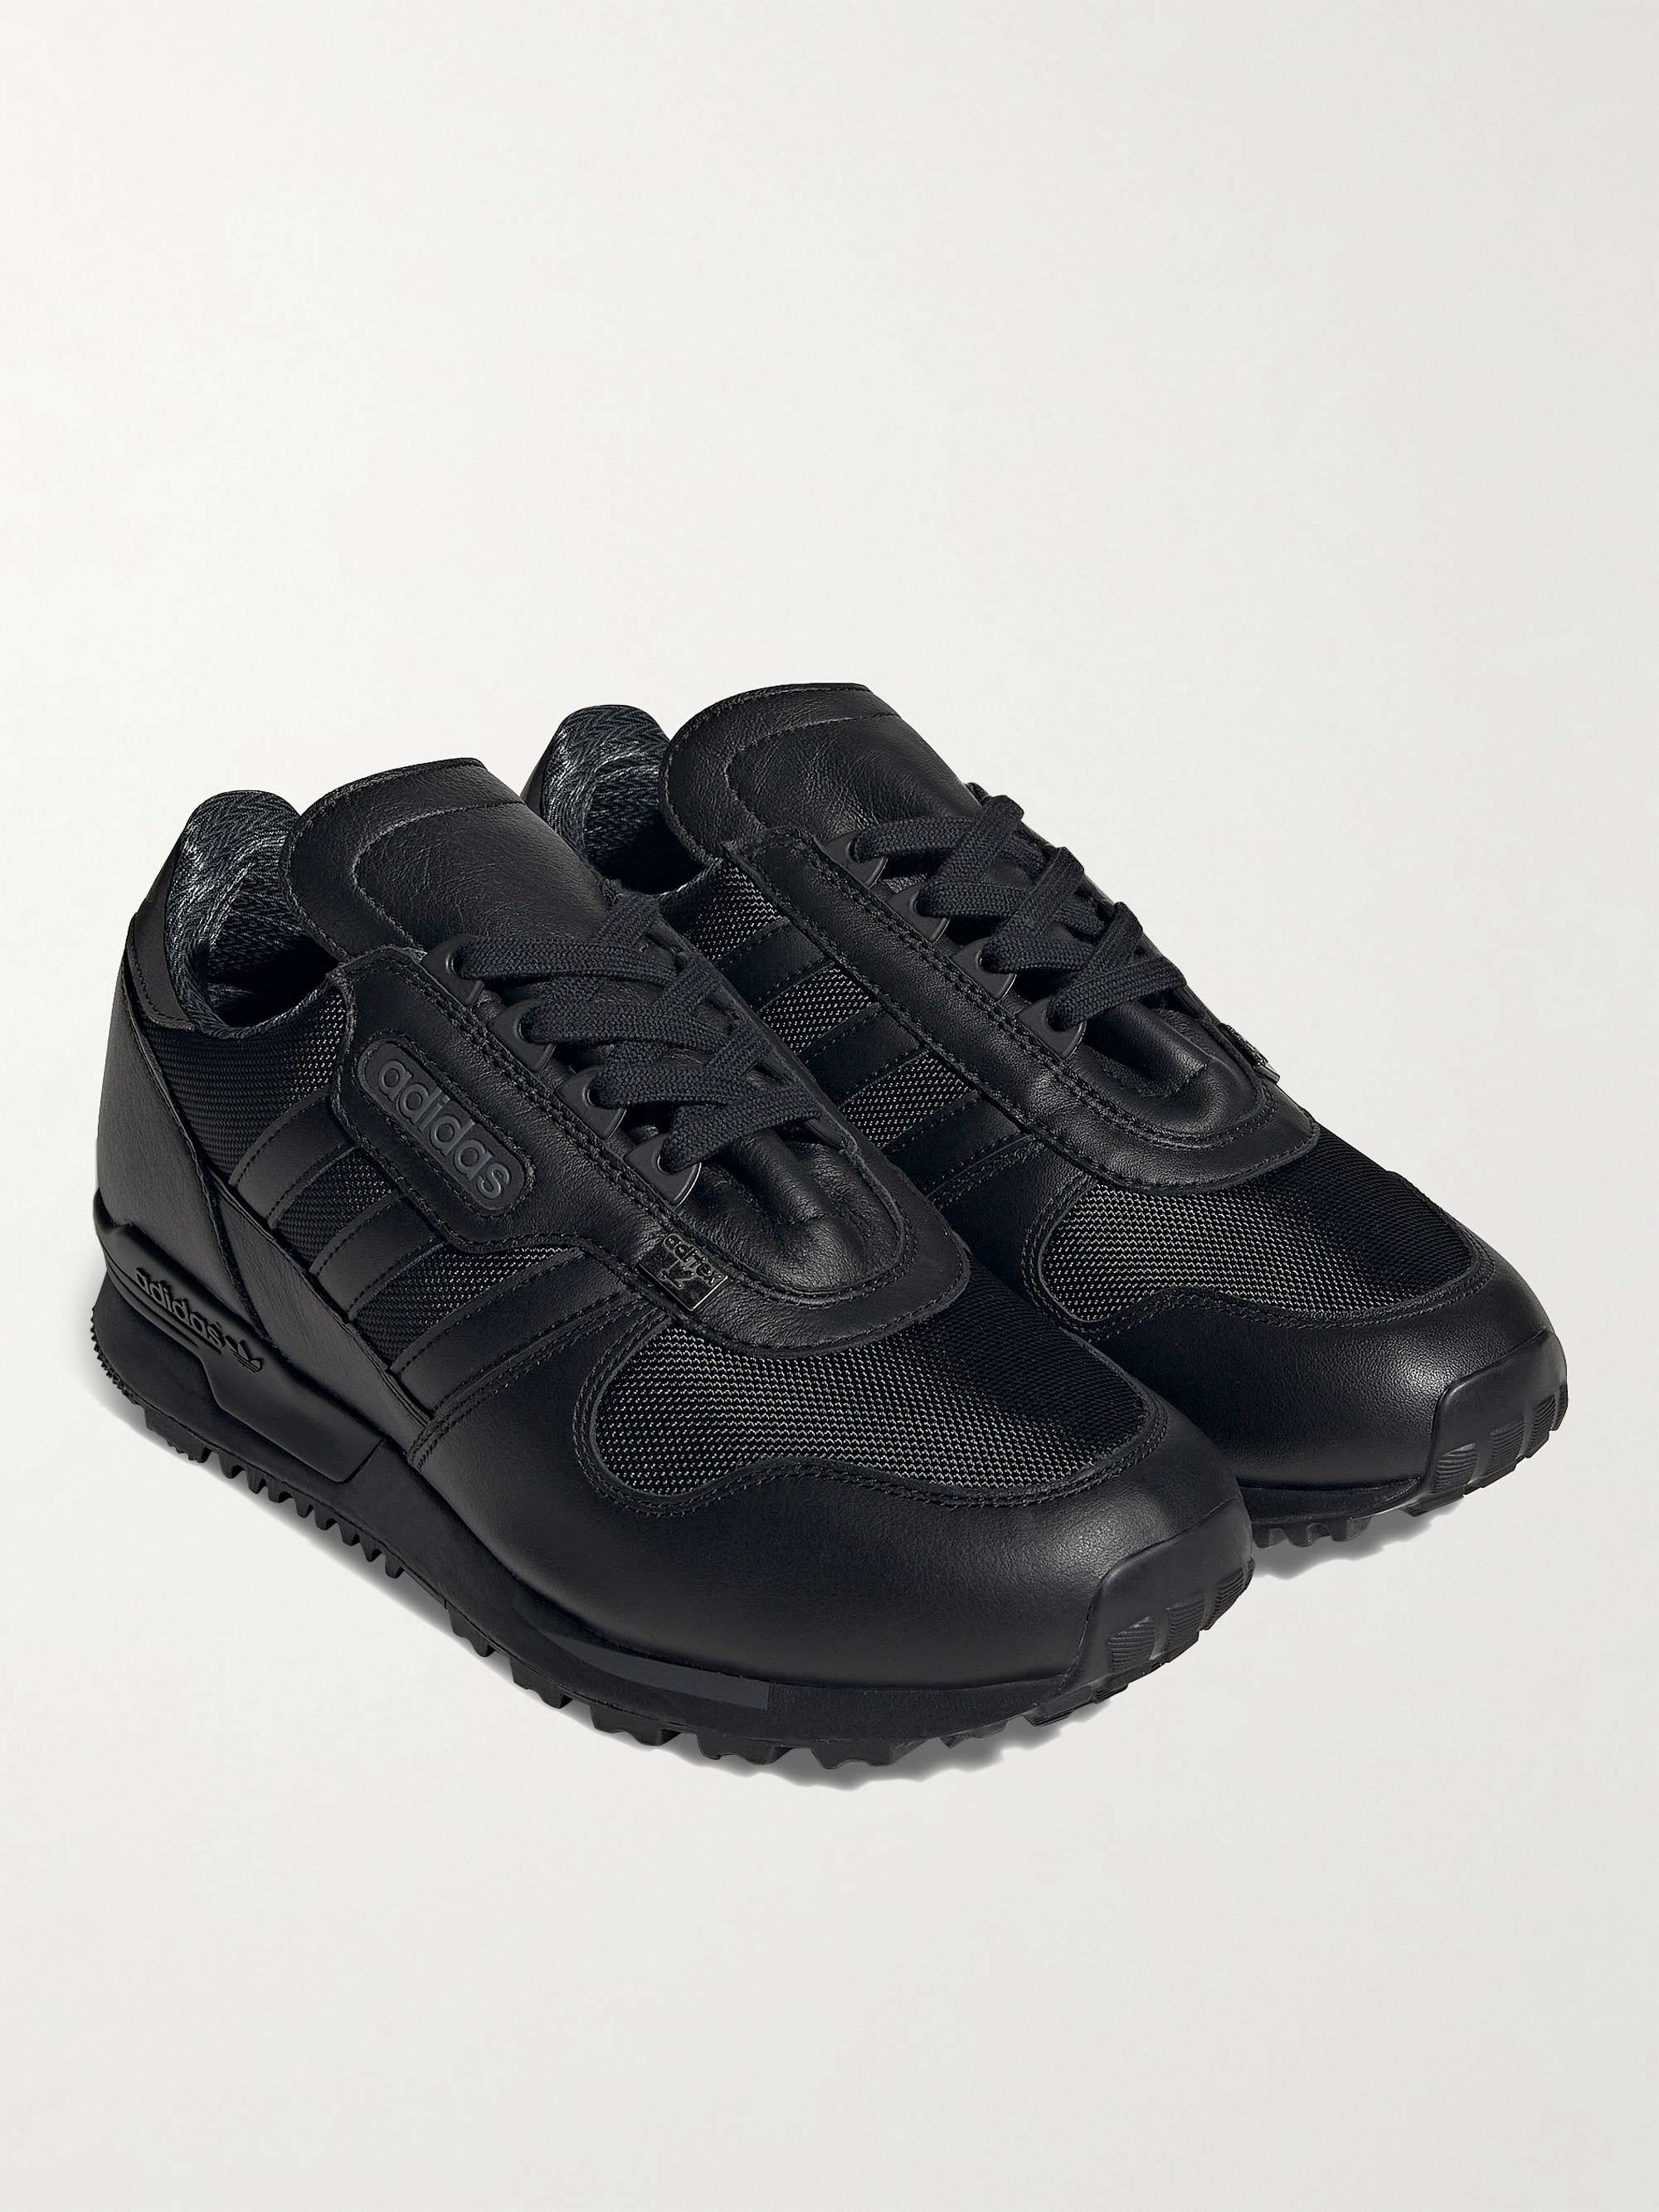 ADIDAS CONSORTIUM Hartness SPZL Leather and Mesh Sneakers | MR PORTER